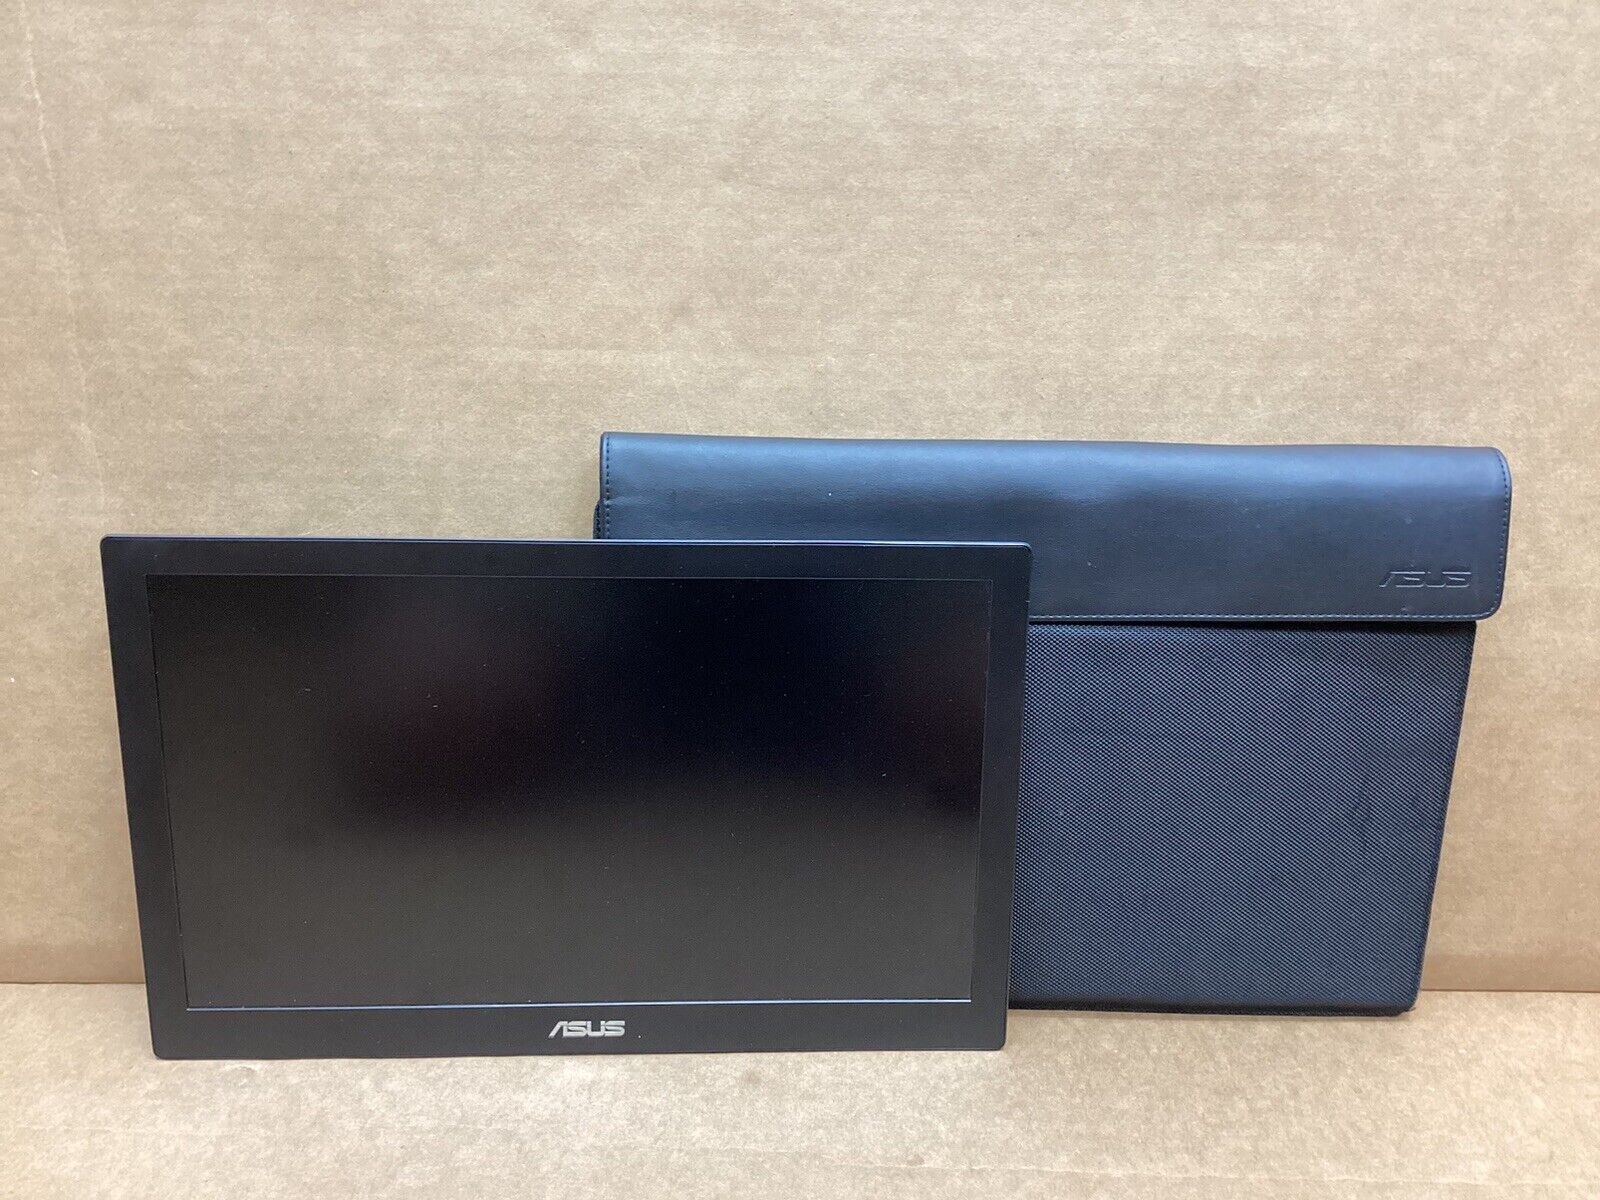 ASUS MB MB169B+ 15.6 inch FHD 1920x1080 USB Widescreen Portable LCD Monitor